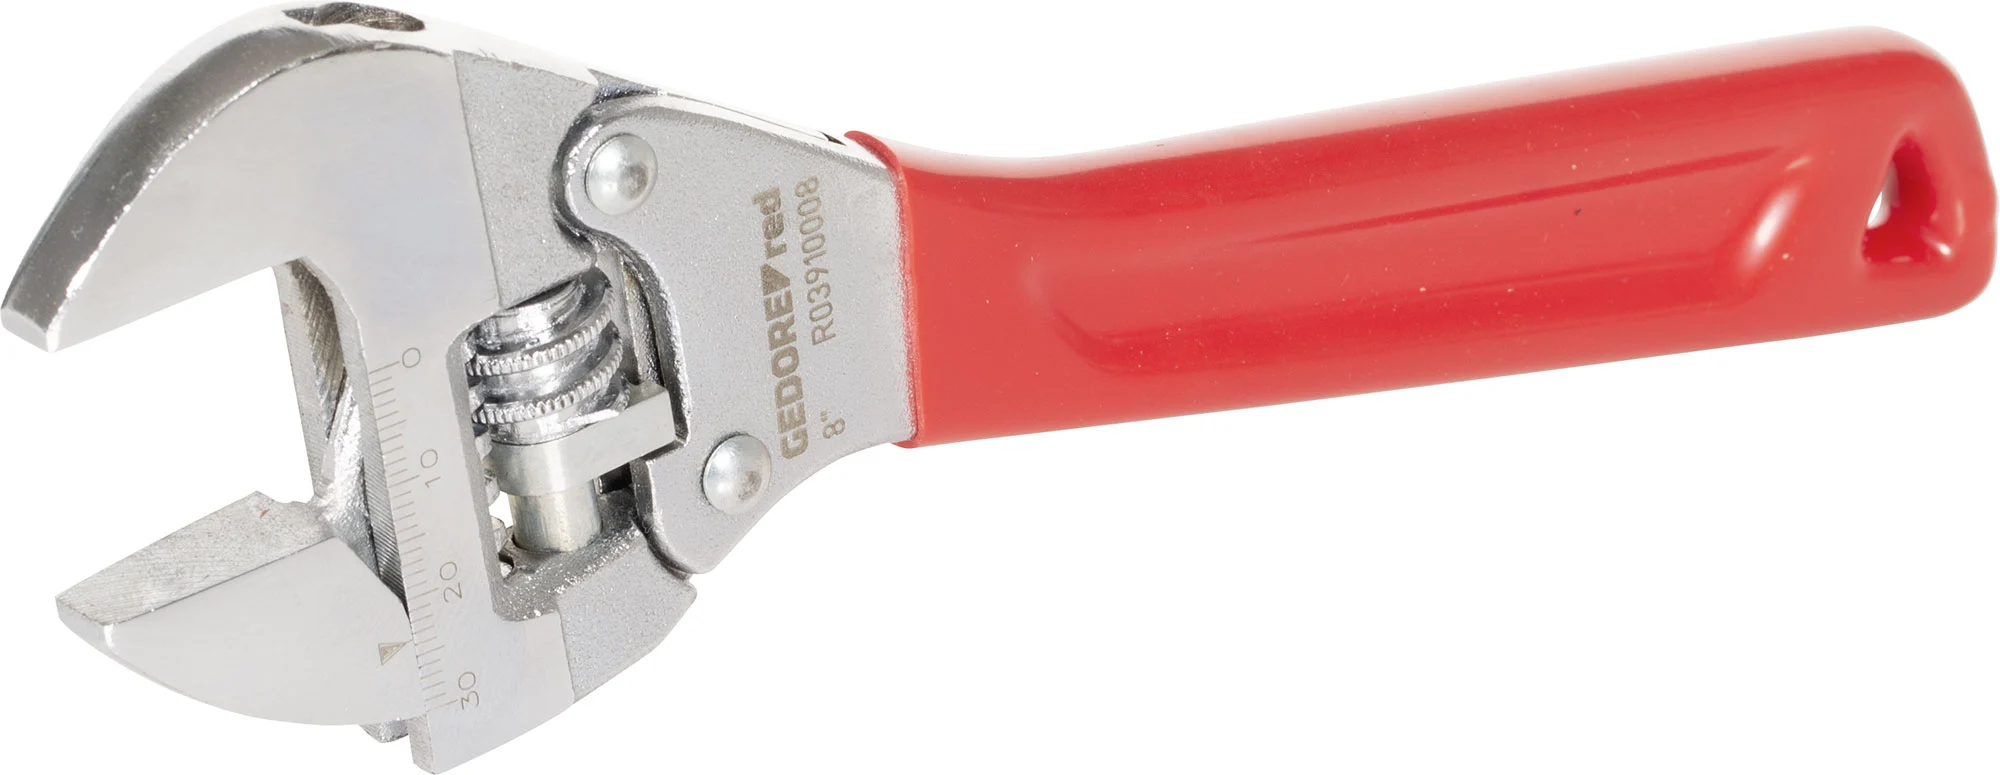 Gedore red GEDORE red chiave inglese con chiave a cricchetto di 2 dimensioni